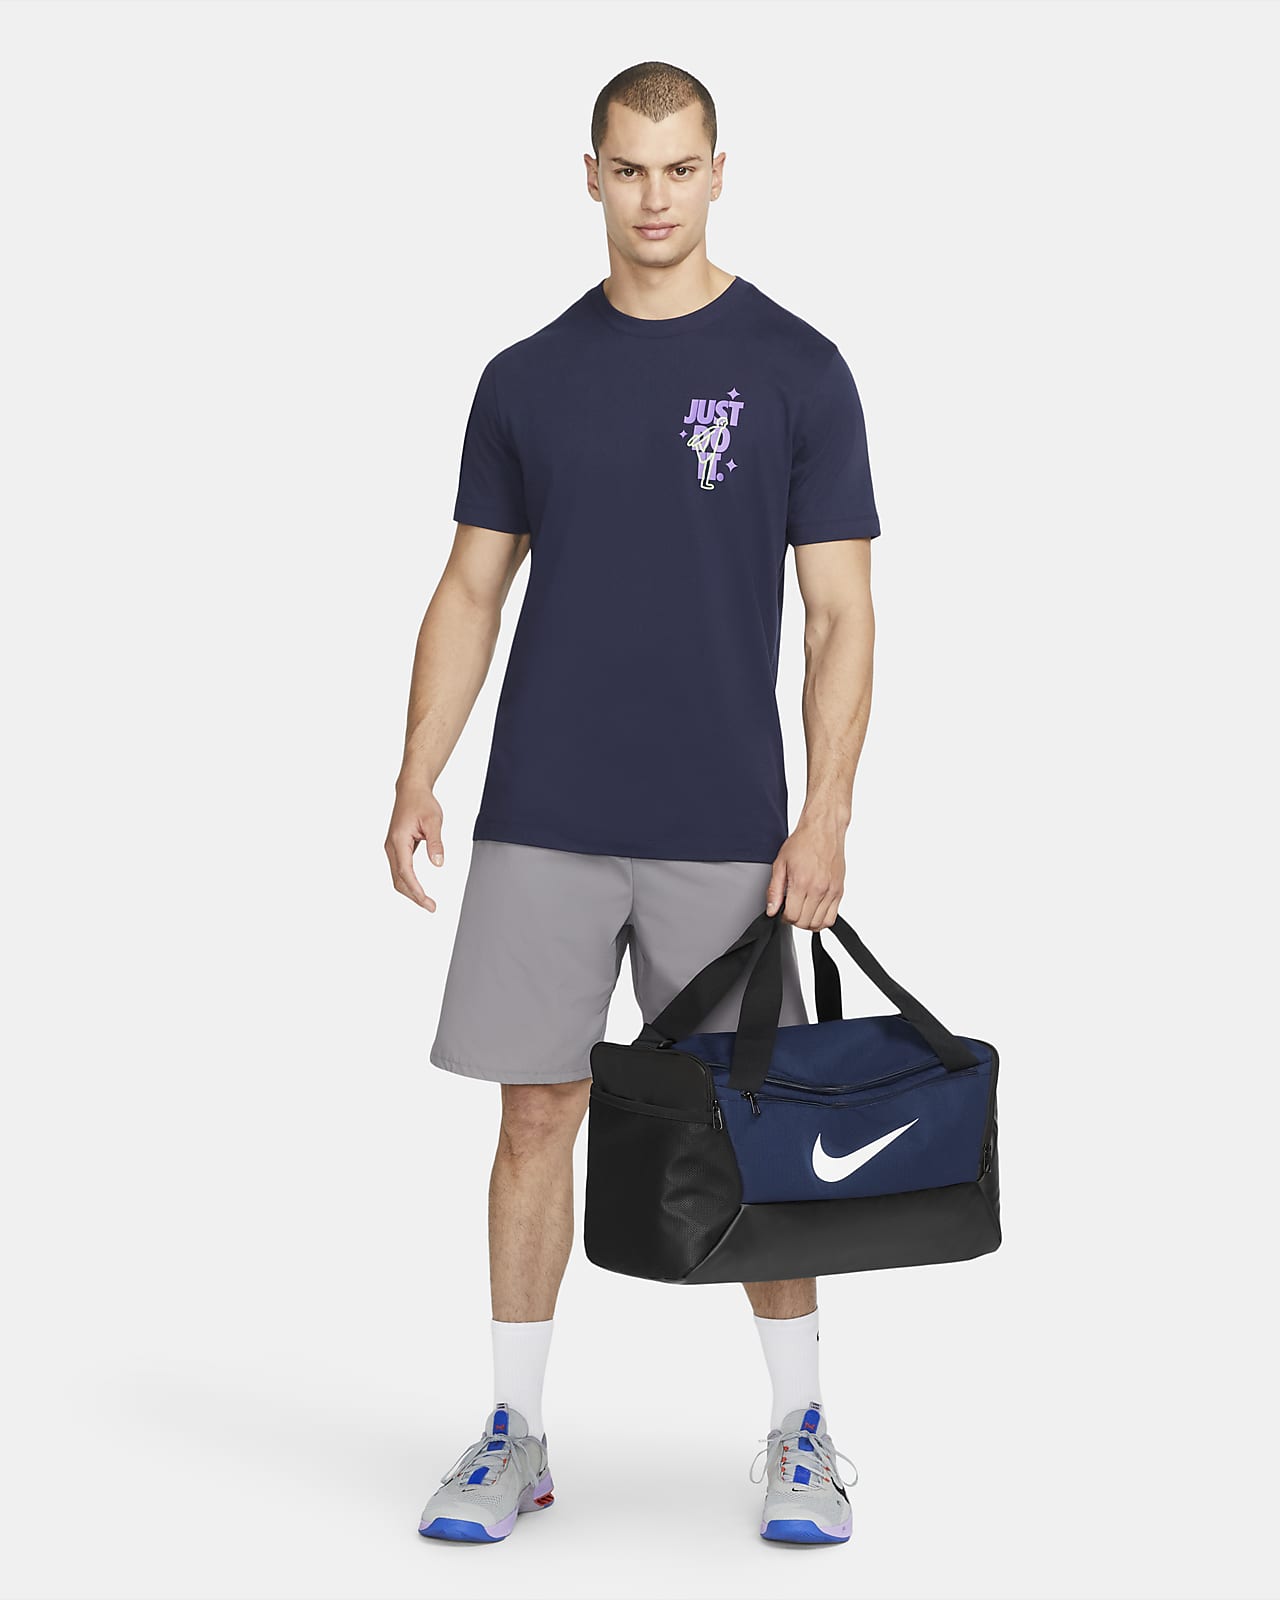 Nike Brasilia 9.5 Training Duffel Bag (Small, 41L). Nike SE